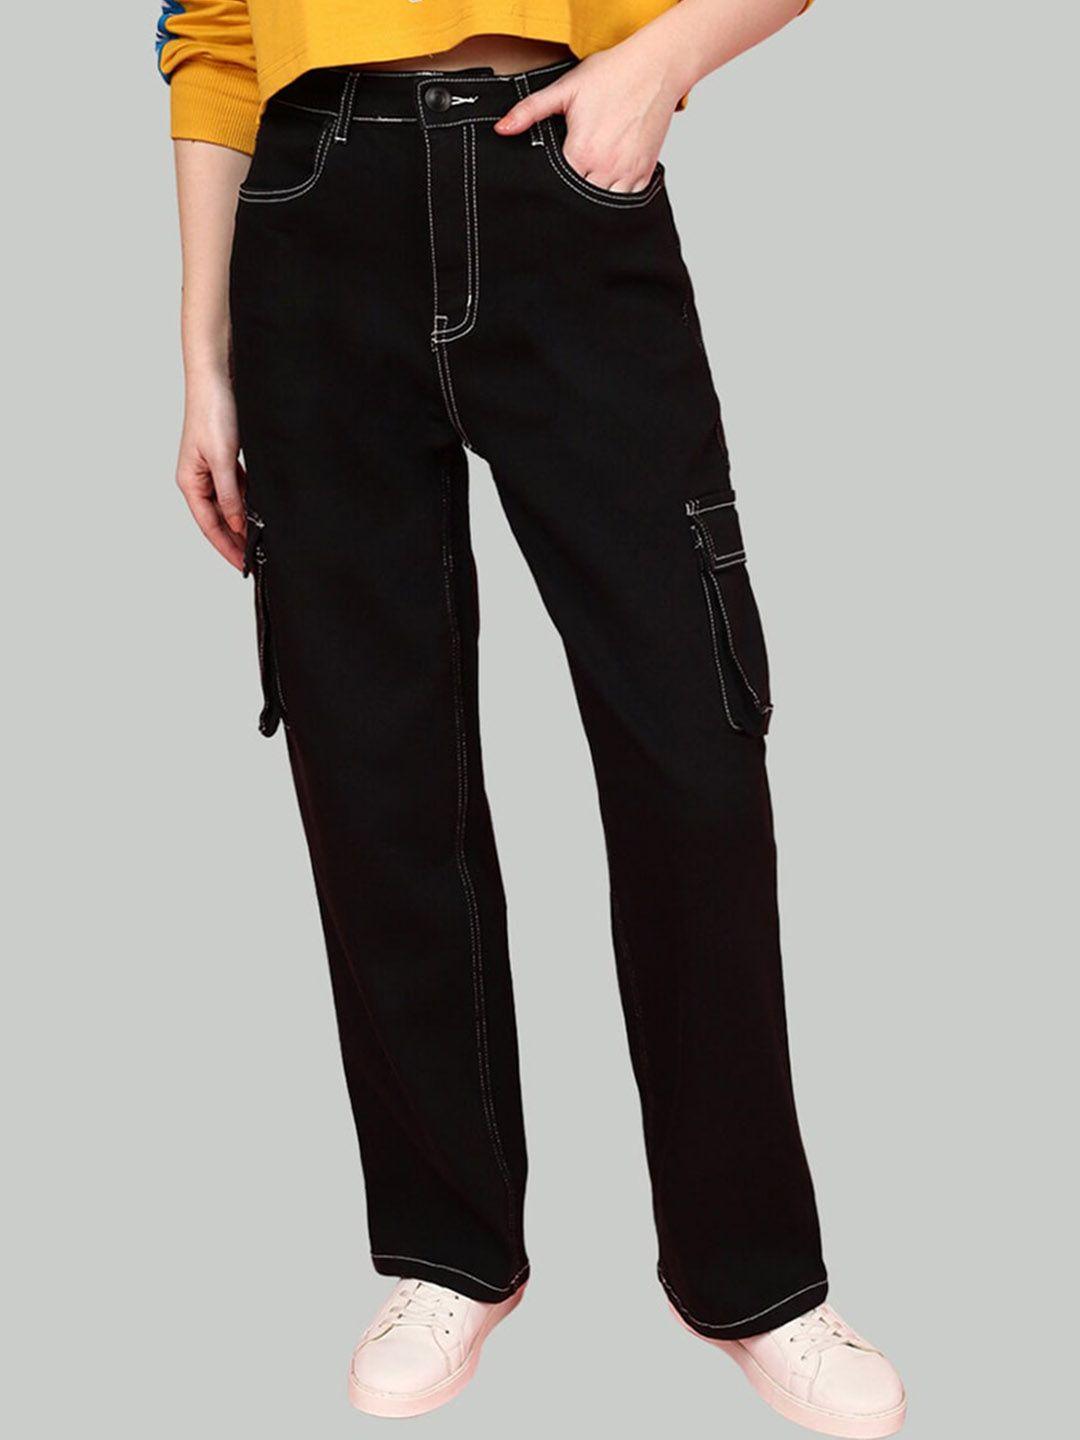 JUNEBERRY Women Original Straight Fit High-Rise Cotton Stretchable Jeans